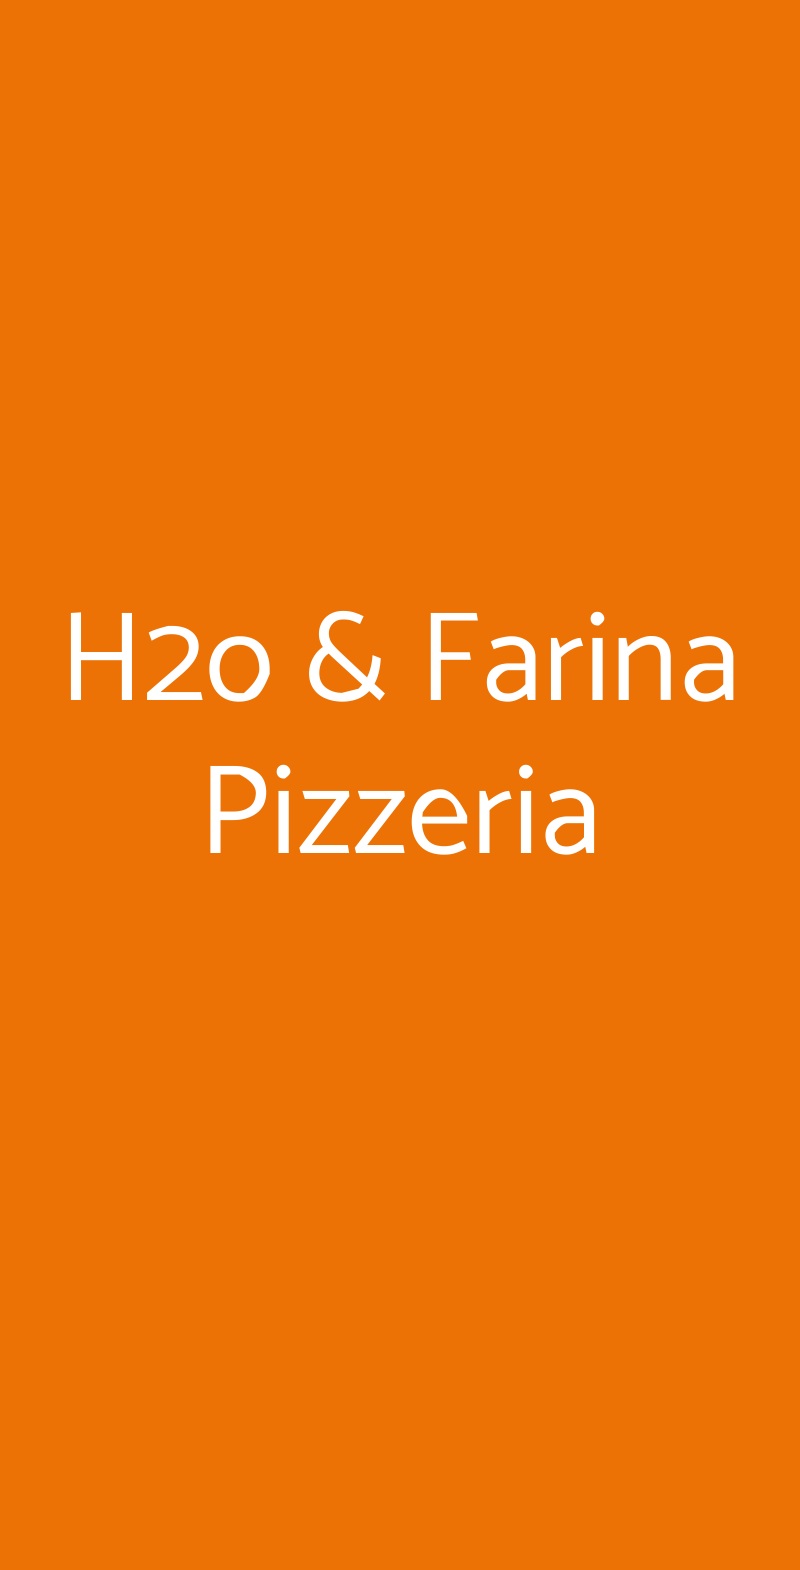 H2o & Farina Pizzeria Roma menù 1 pagina